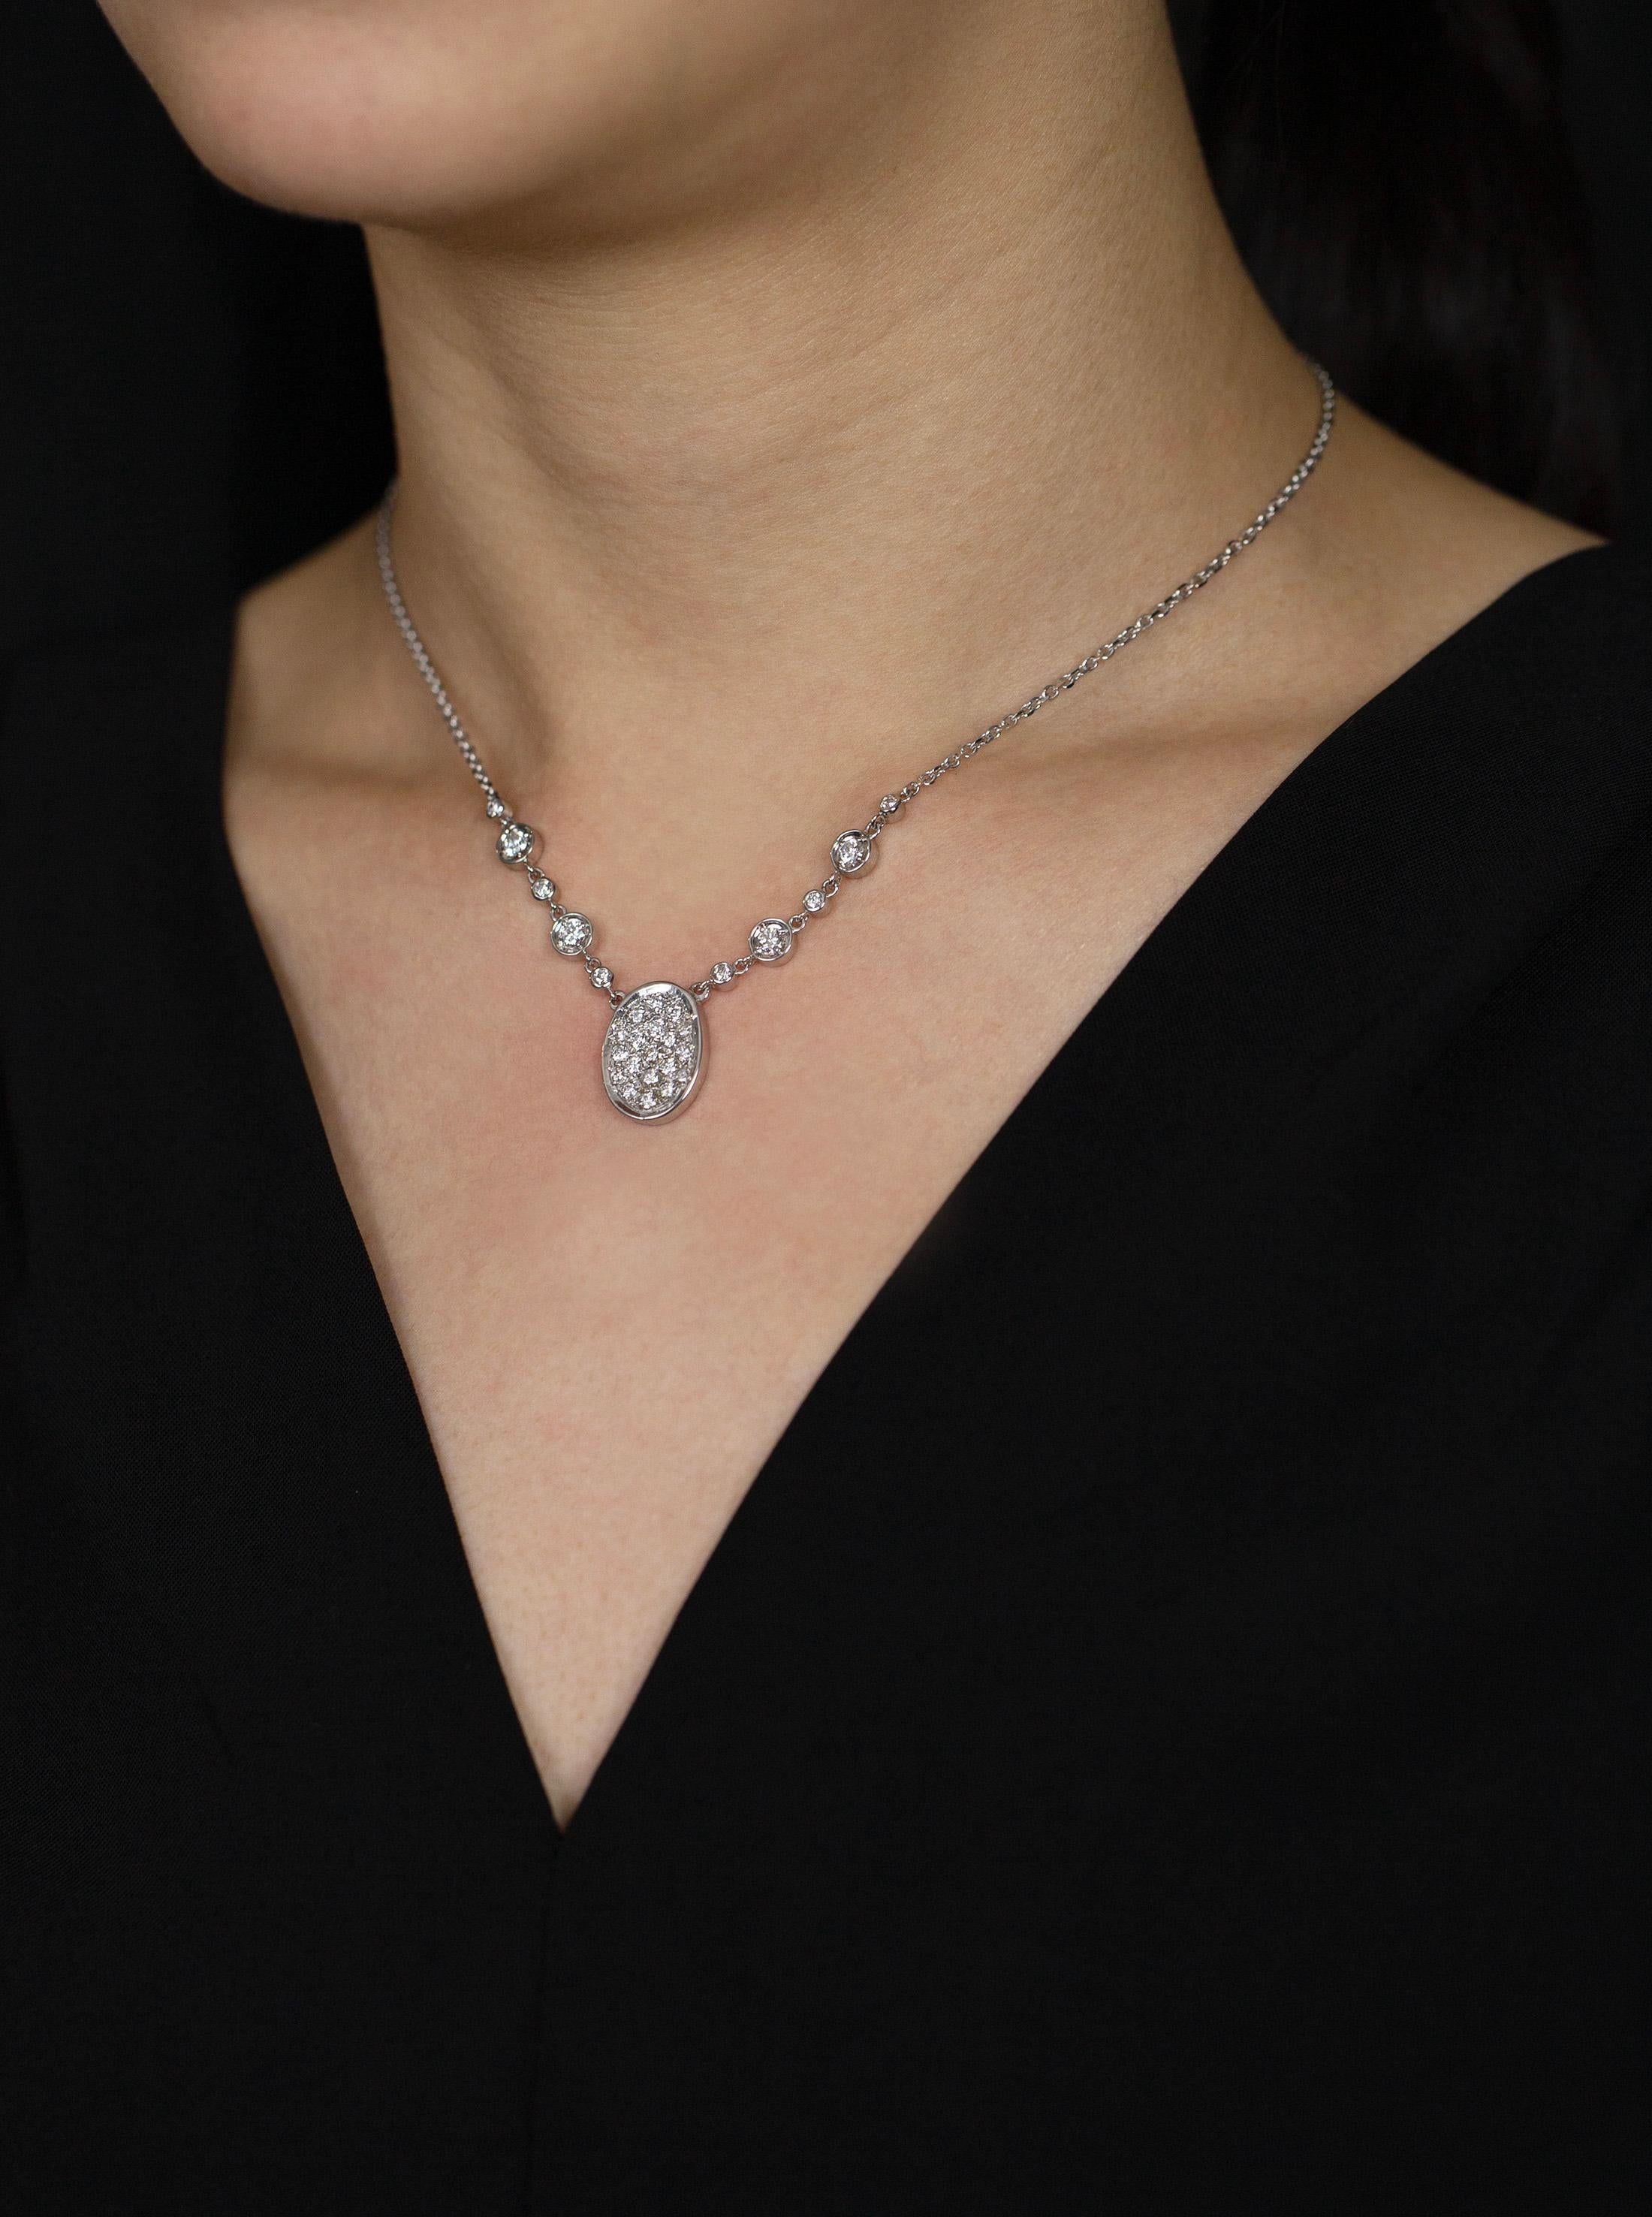 Women's 1.24 Carats Total Round Cut Diamond Fashion Pendant Necklace For Sale